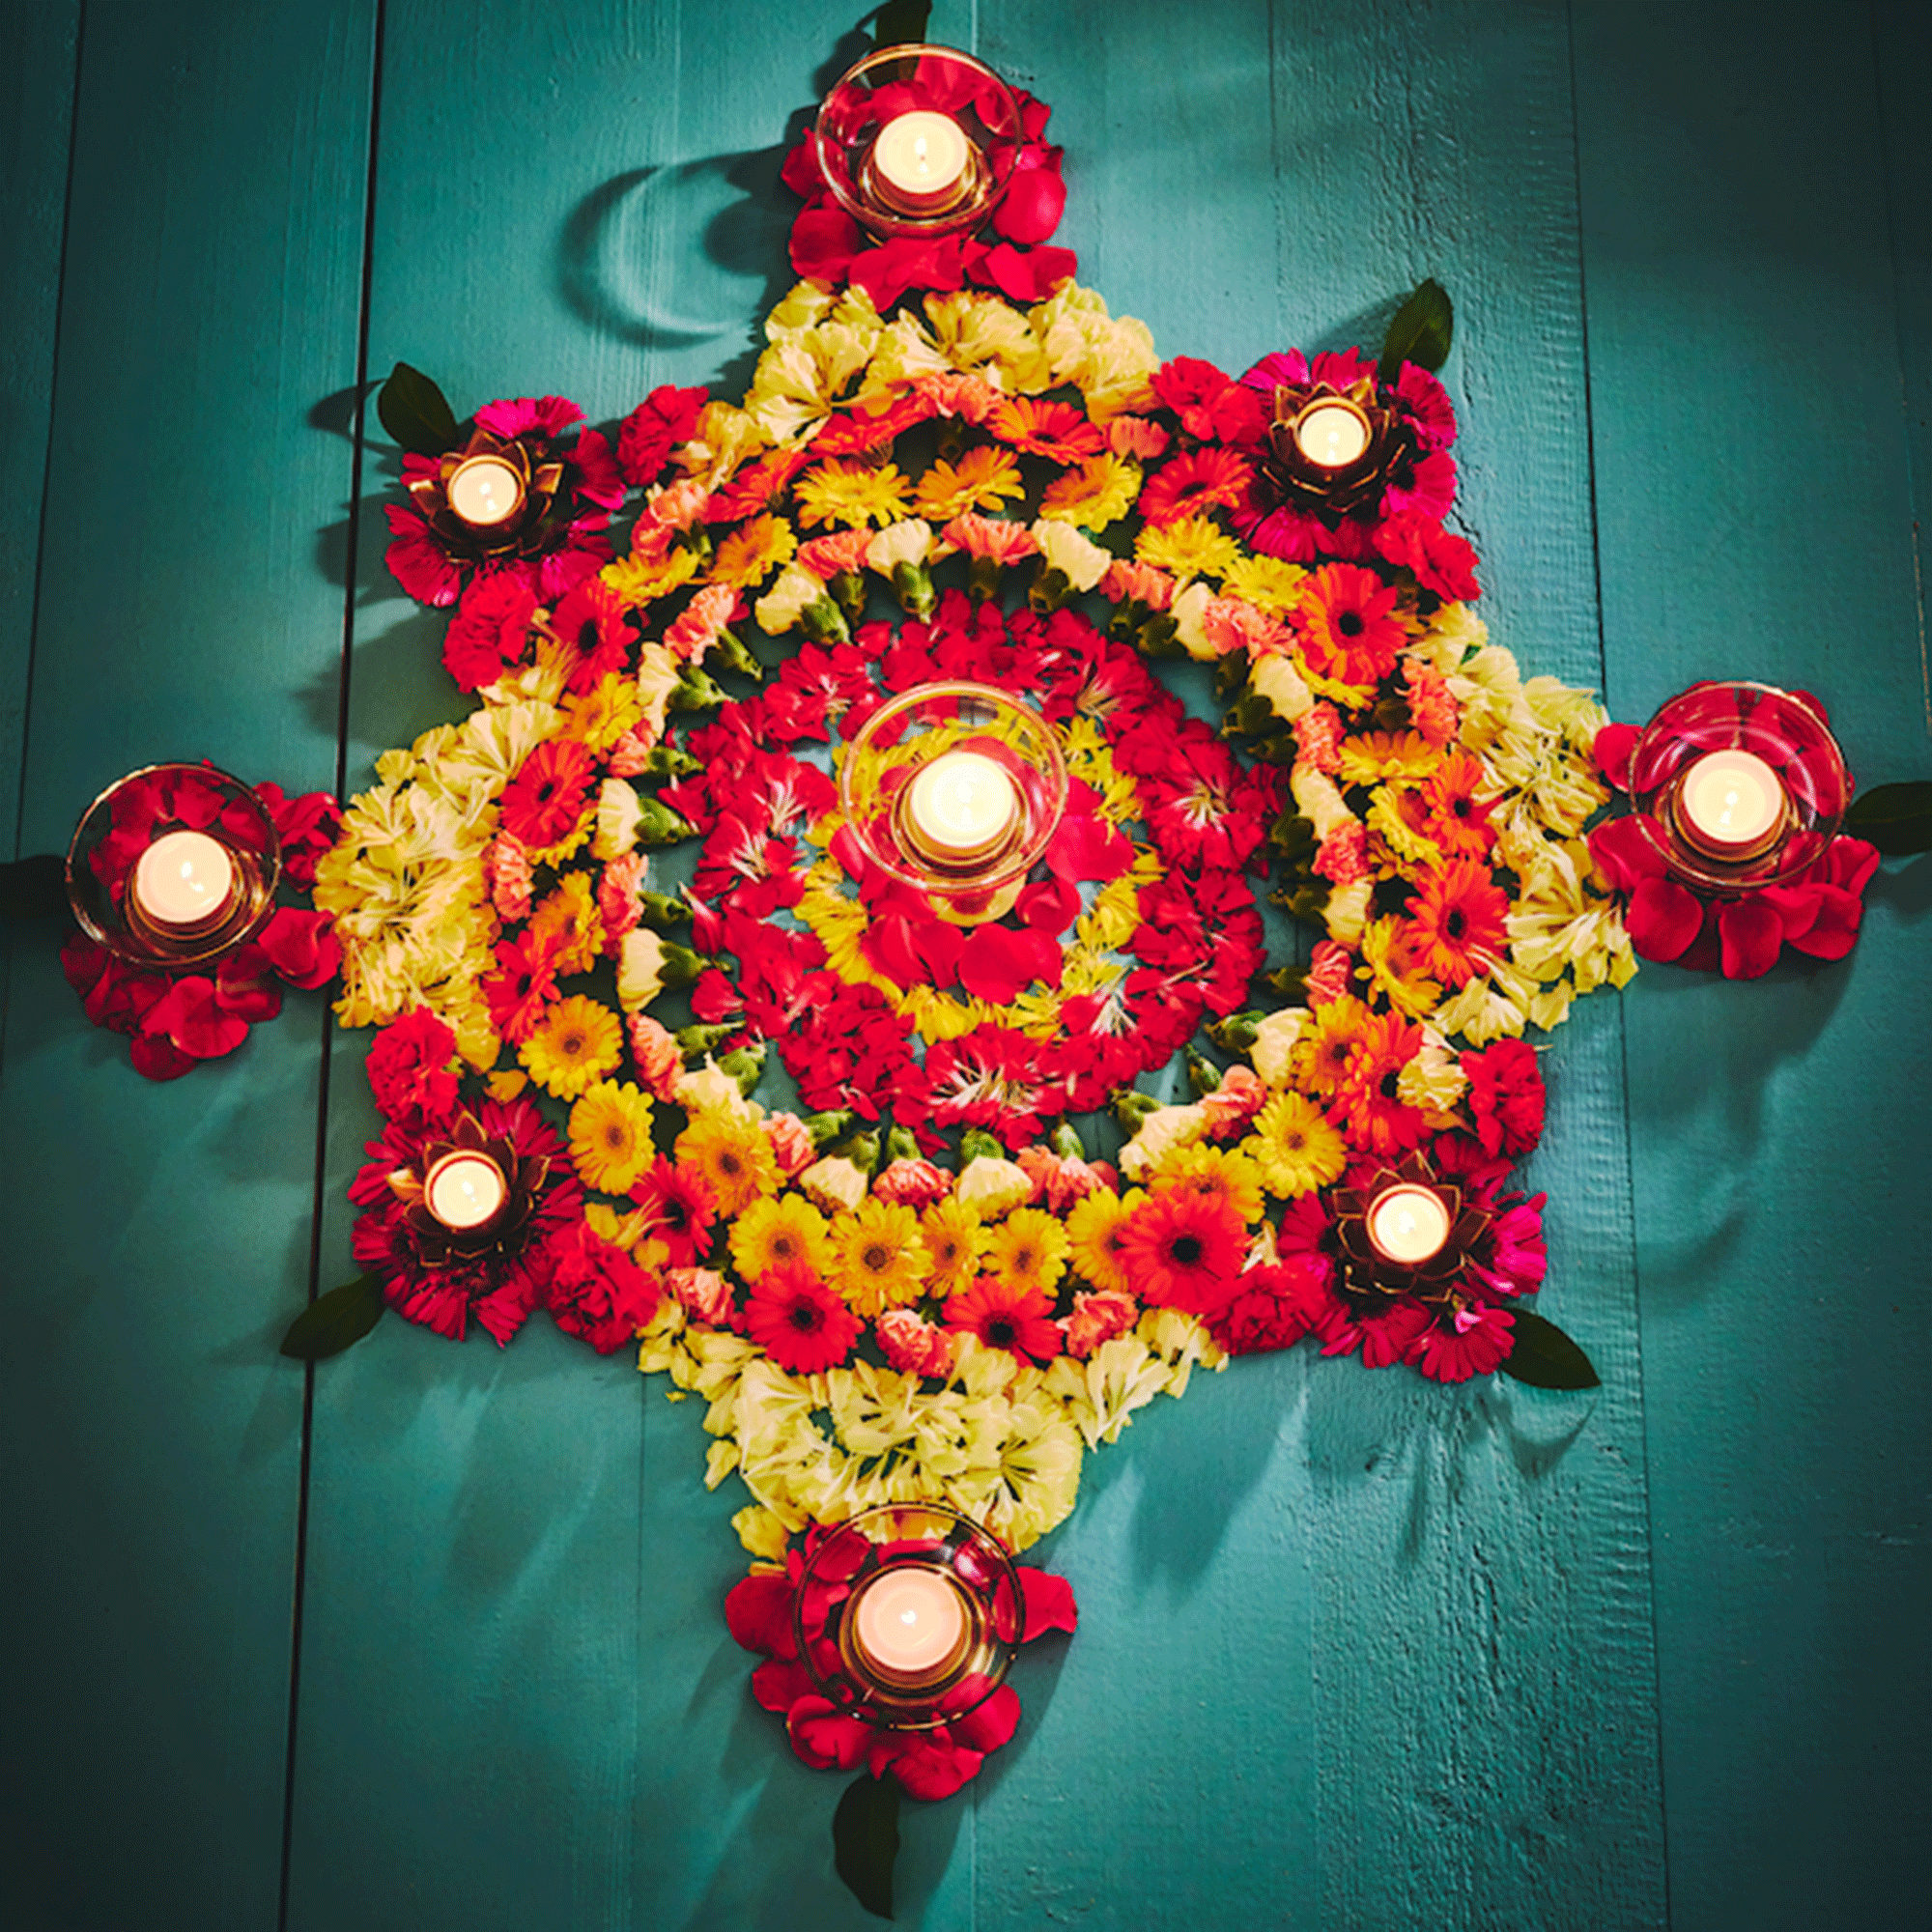 Floral display for Diwali